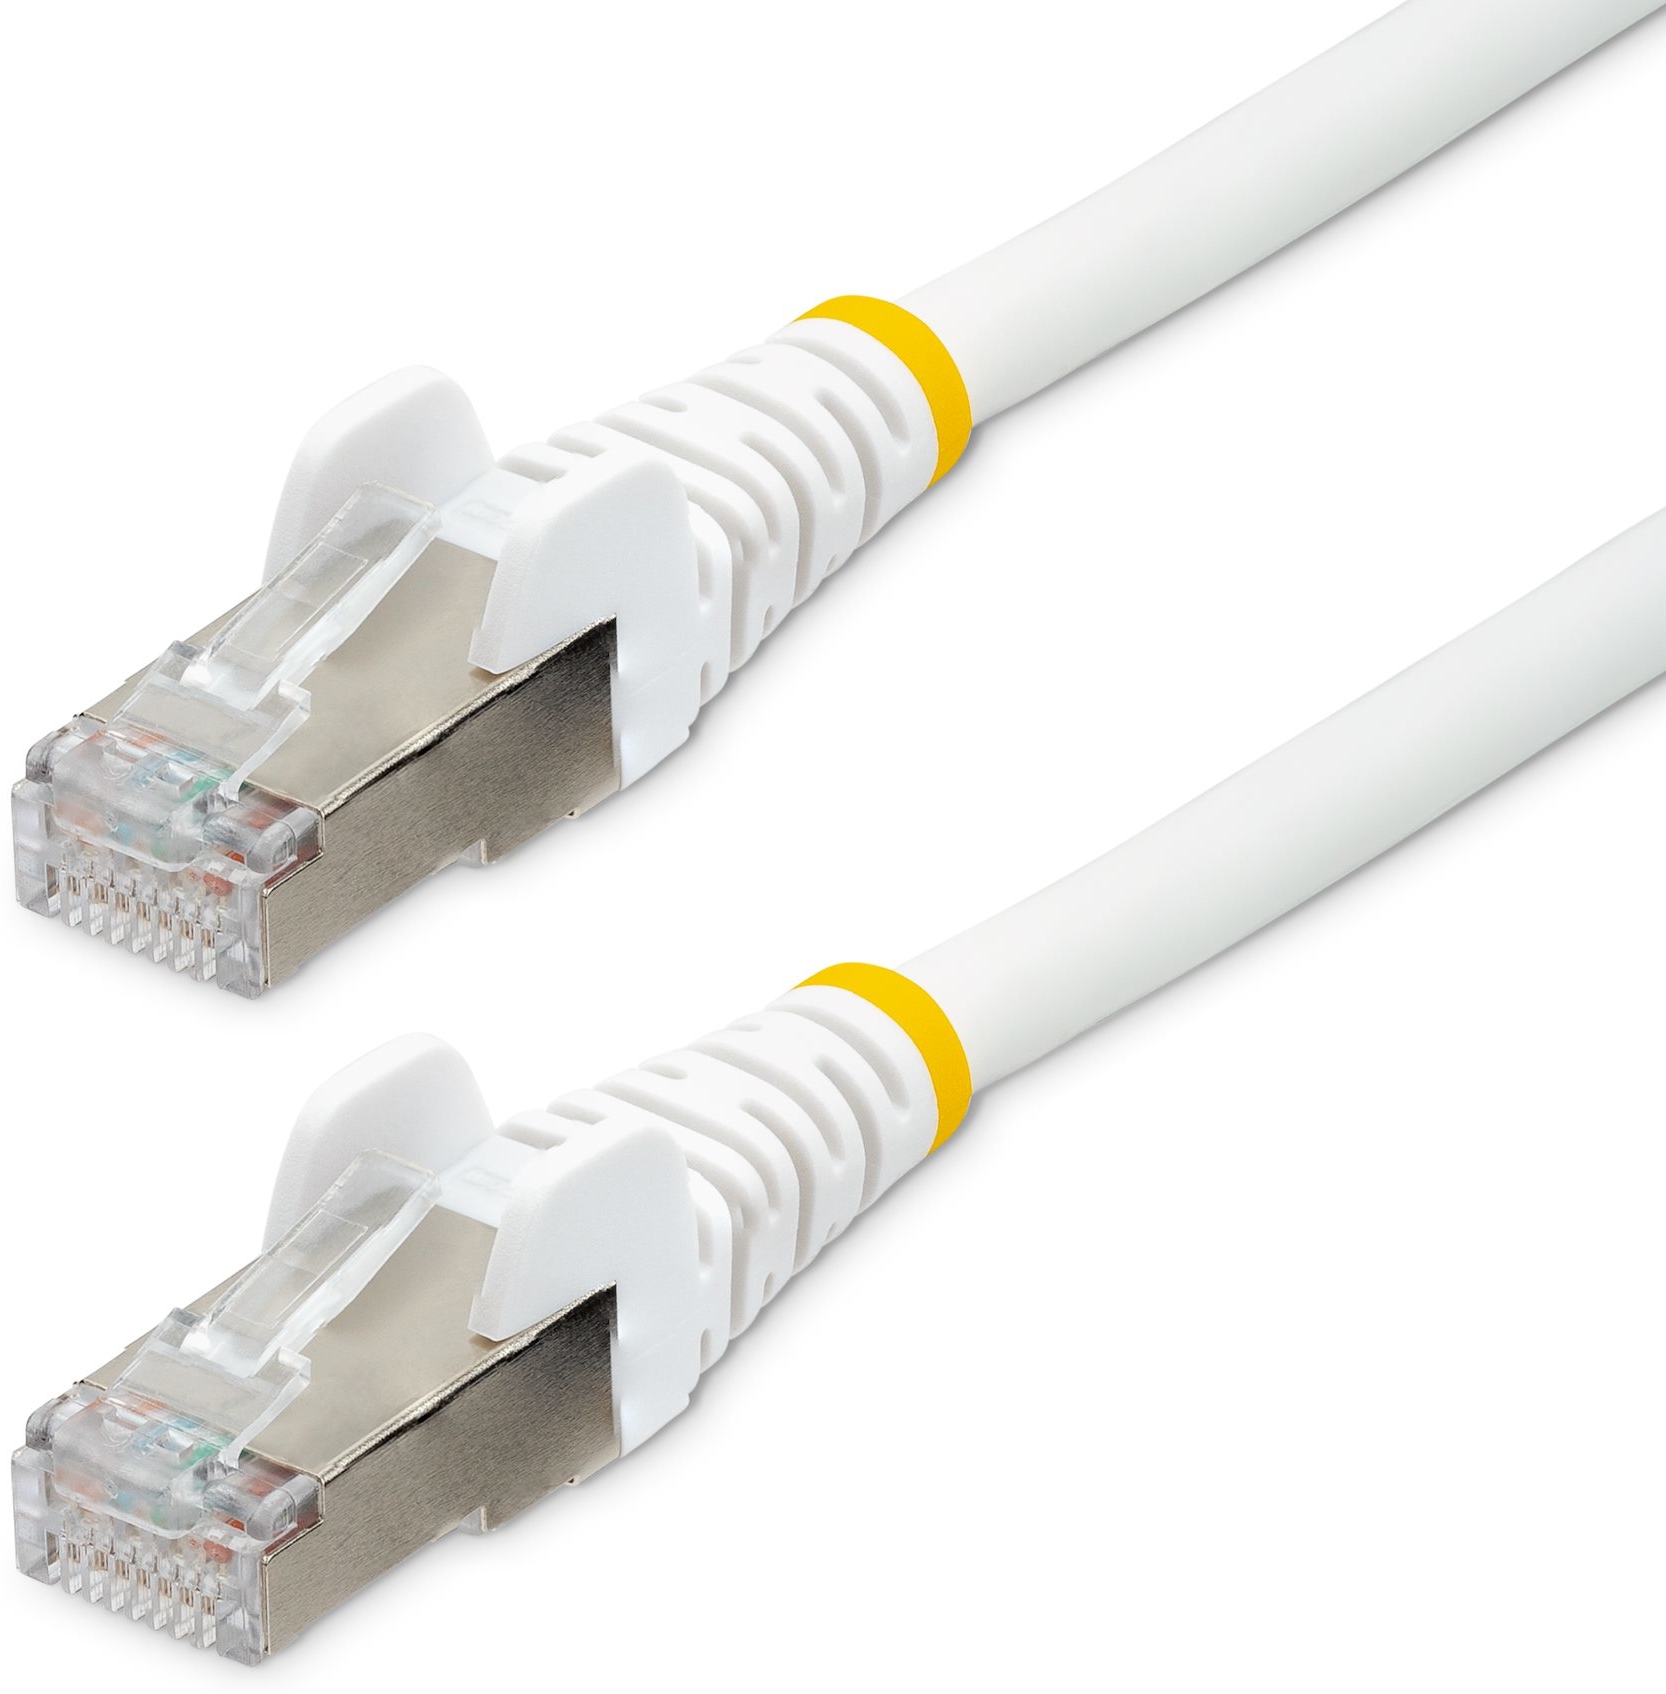 StarTech.com 10m CAT6a Ethernet Kabel, Wit, Low Smoke Zero Halogen (LSZH), 10GbE 500MHz 100W PoE++ Snagless RJ-45 S/FTP Netwerk Patch Kabel met Trekontlasting, ETL (NLWH-10M-CAT6A-